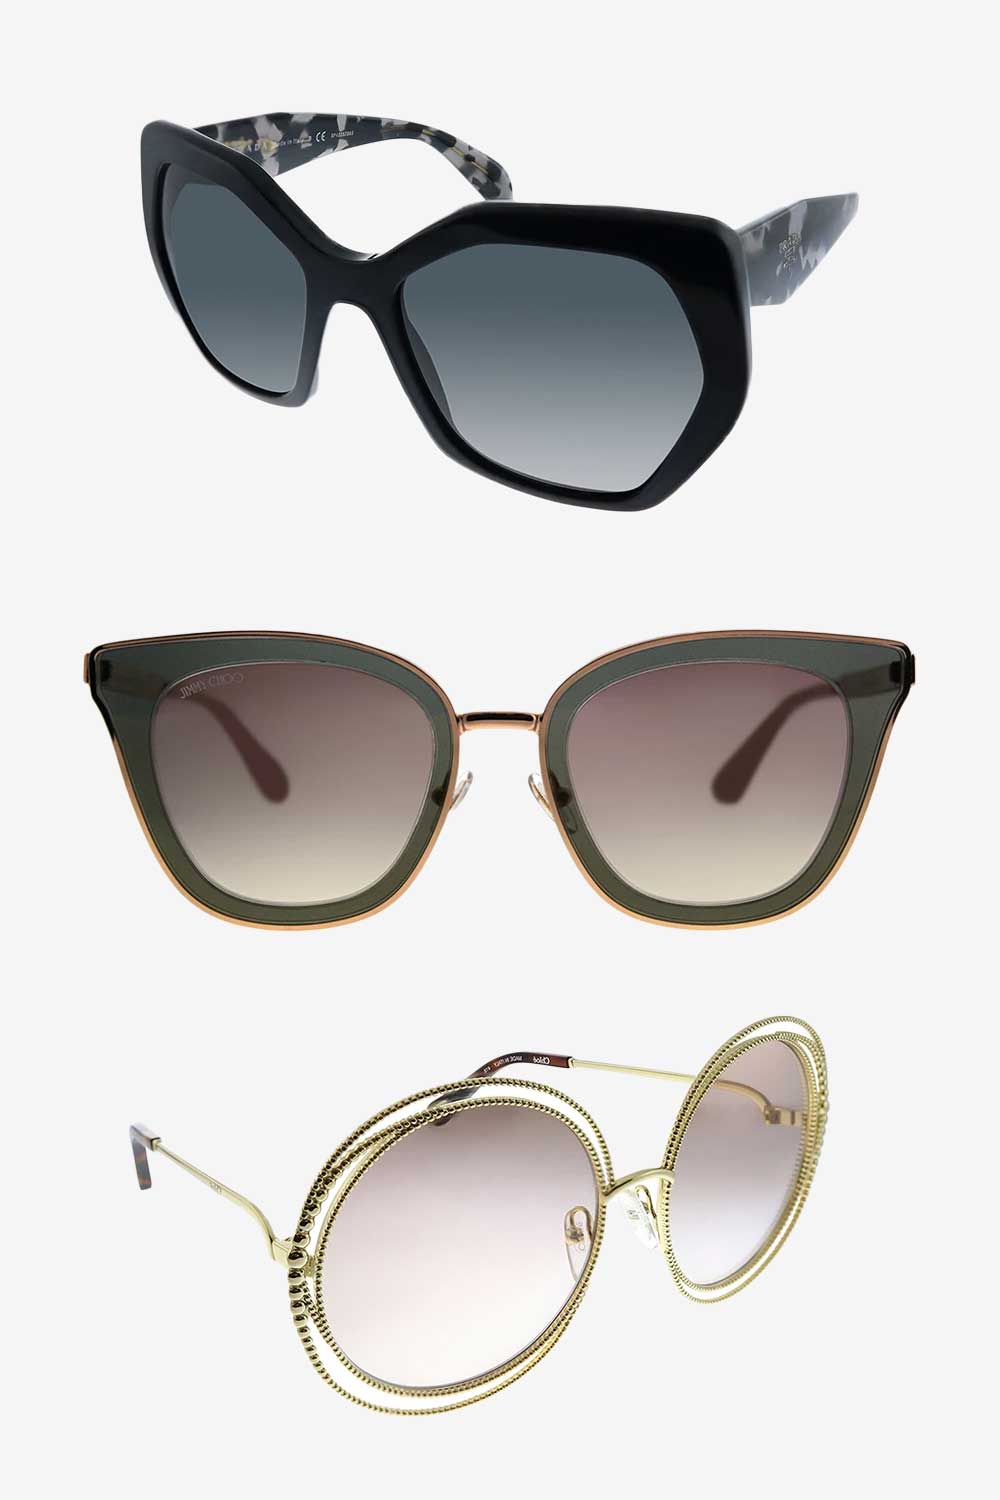 designer sunglasses to look rich